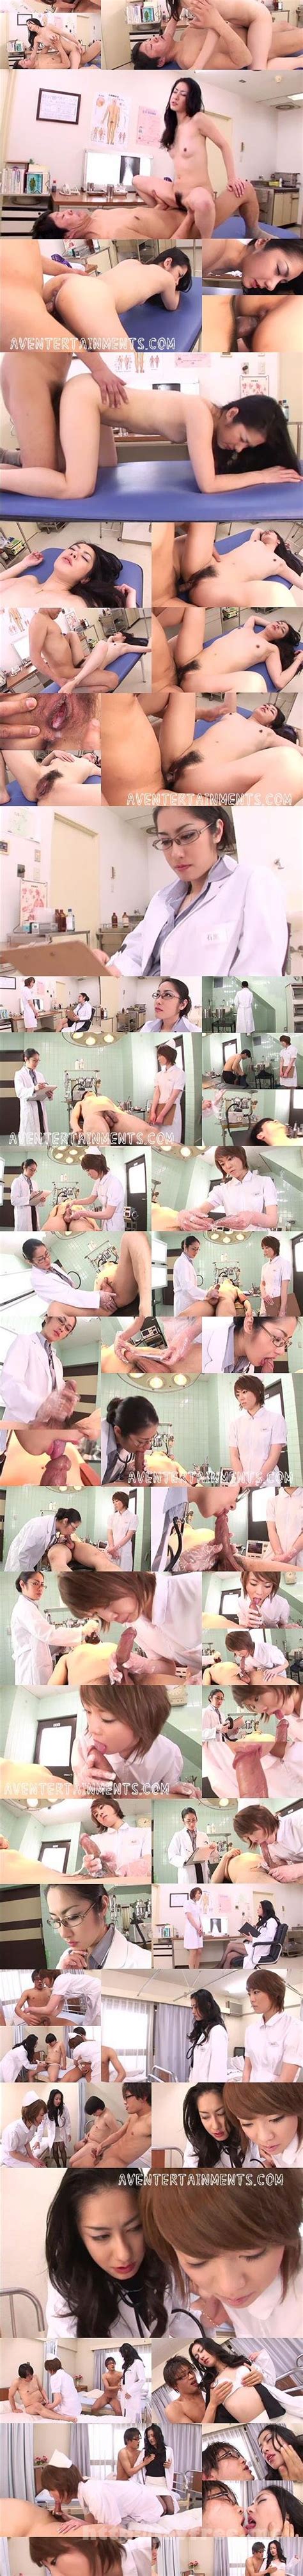 [xv 62] creampie clinic vol 3 izumi mori・miyuki kaga high quality jav